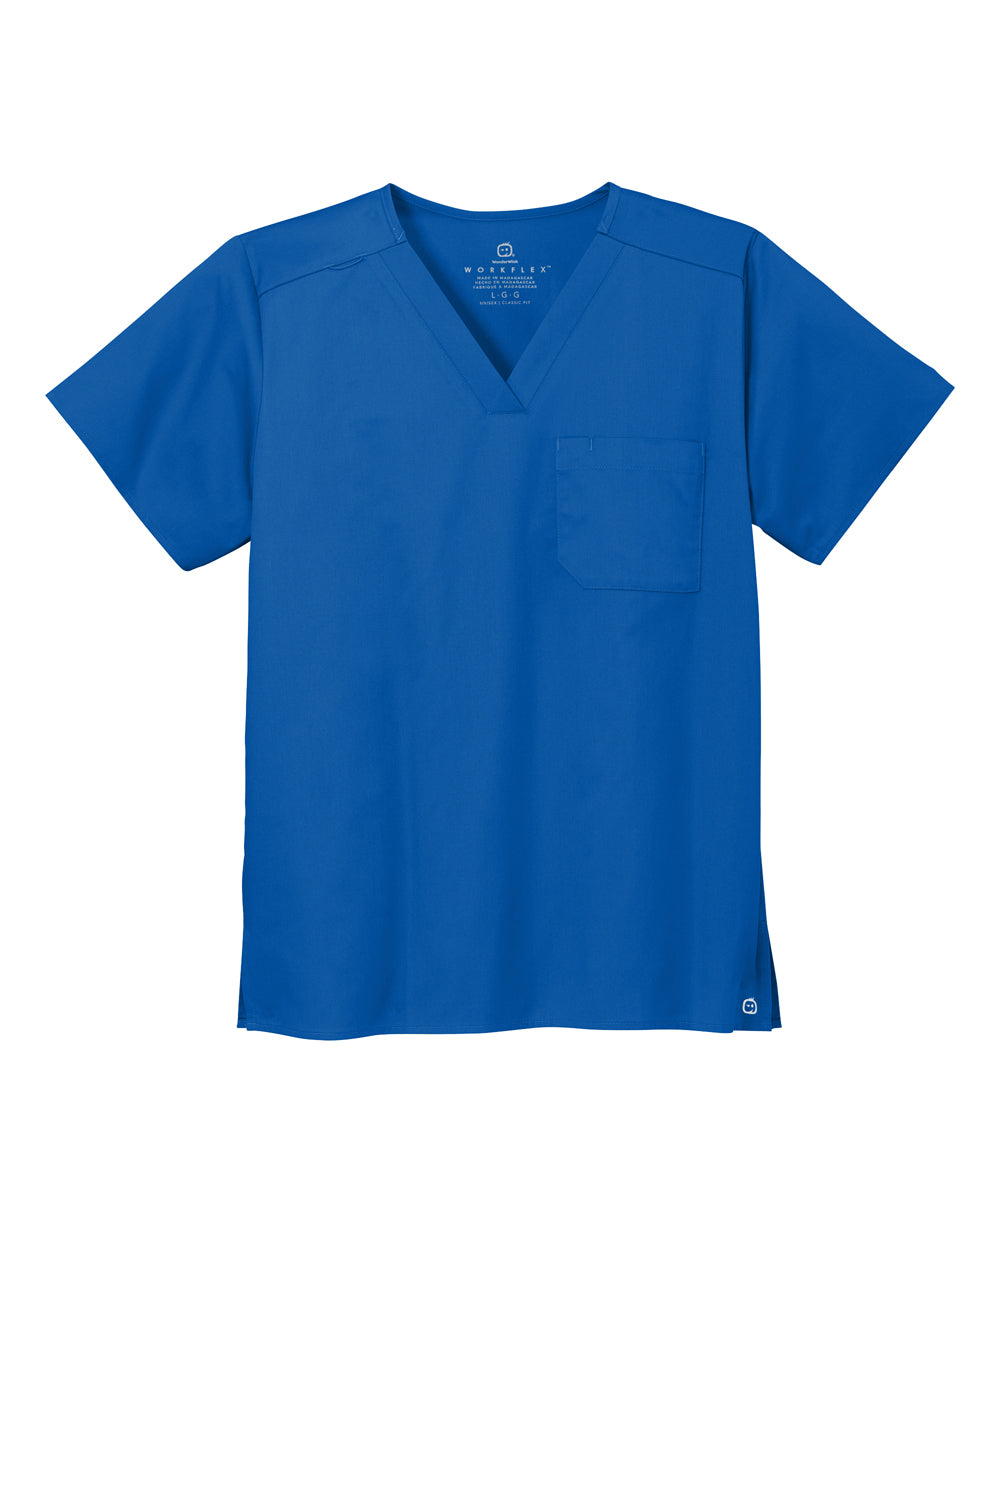 Wonderwink WW3160 WorkFlex Short Sleeve V-Neck Shirt w/ Pocket Royal Blue Flat Front